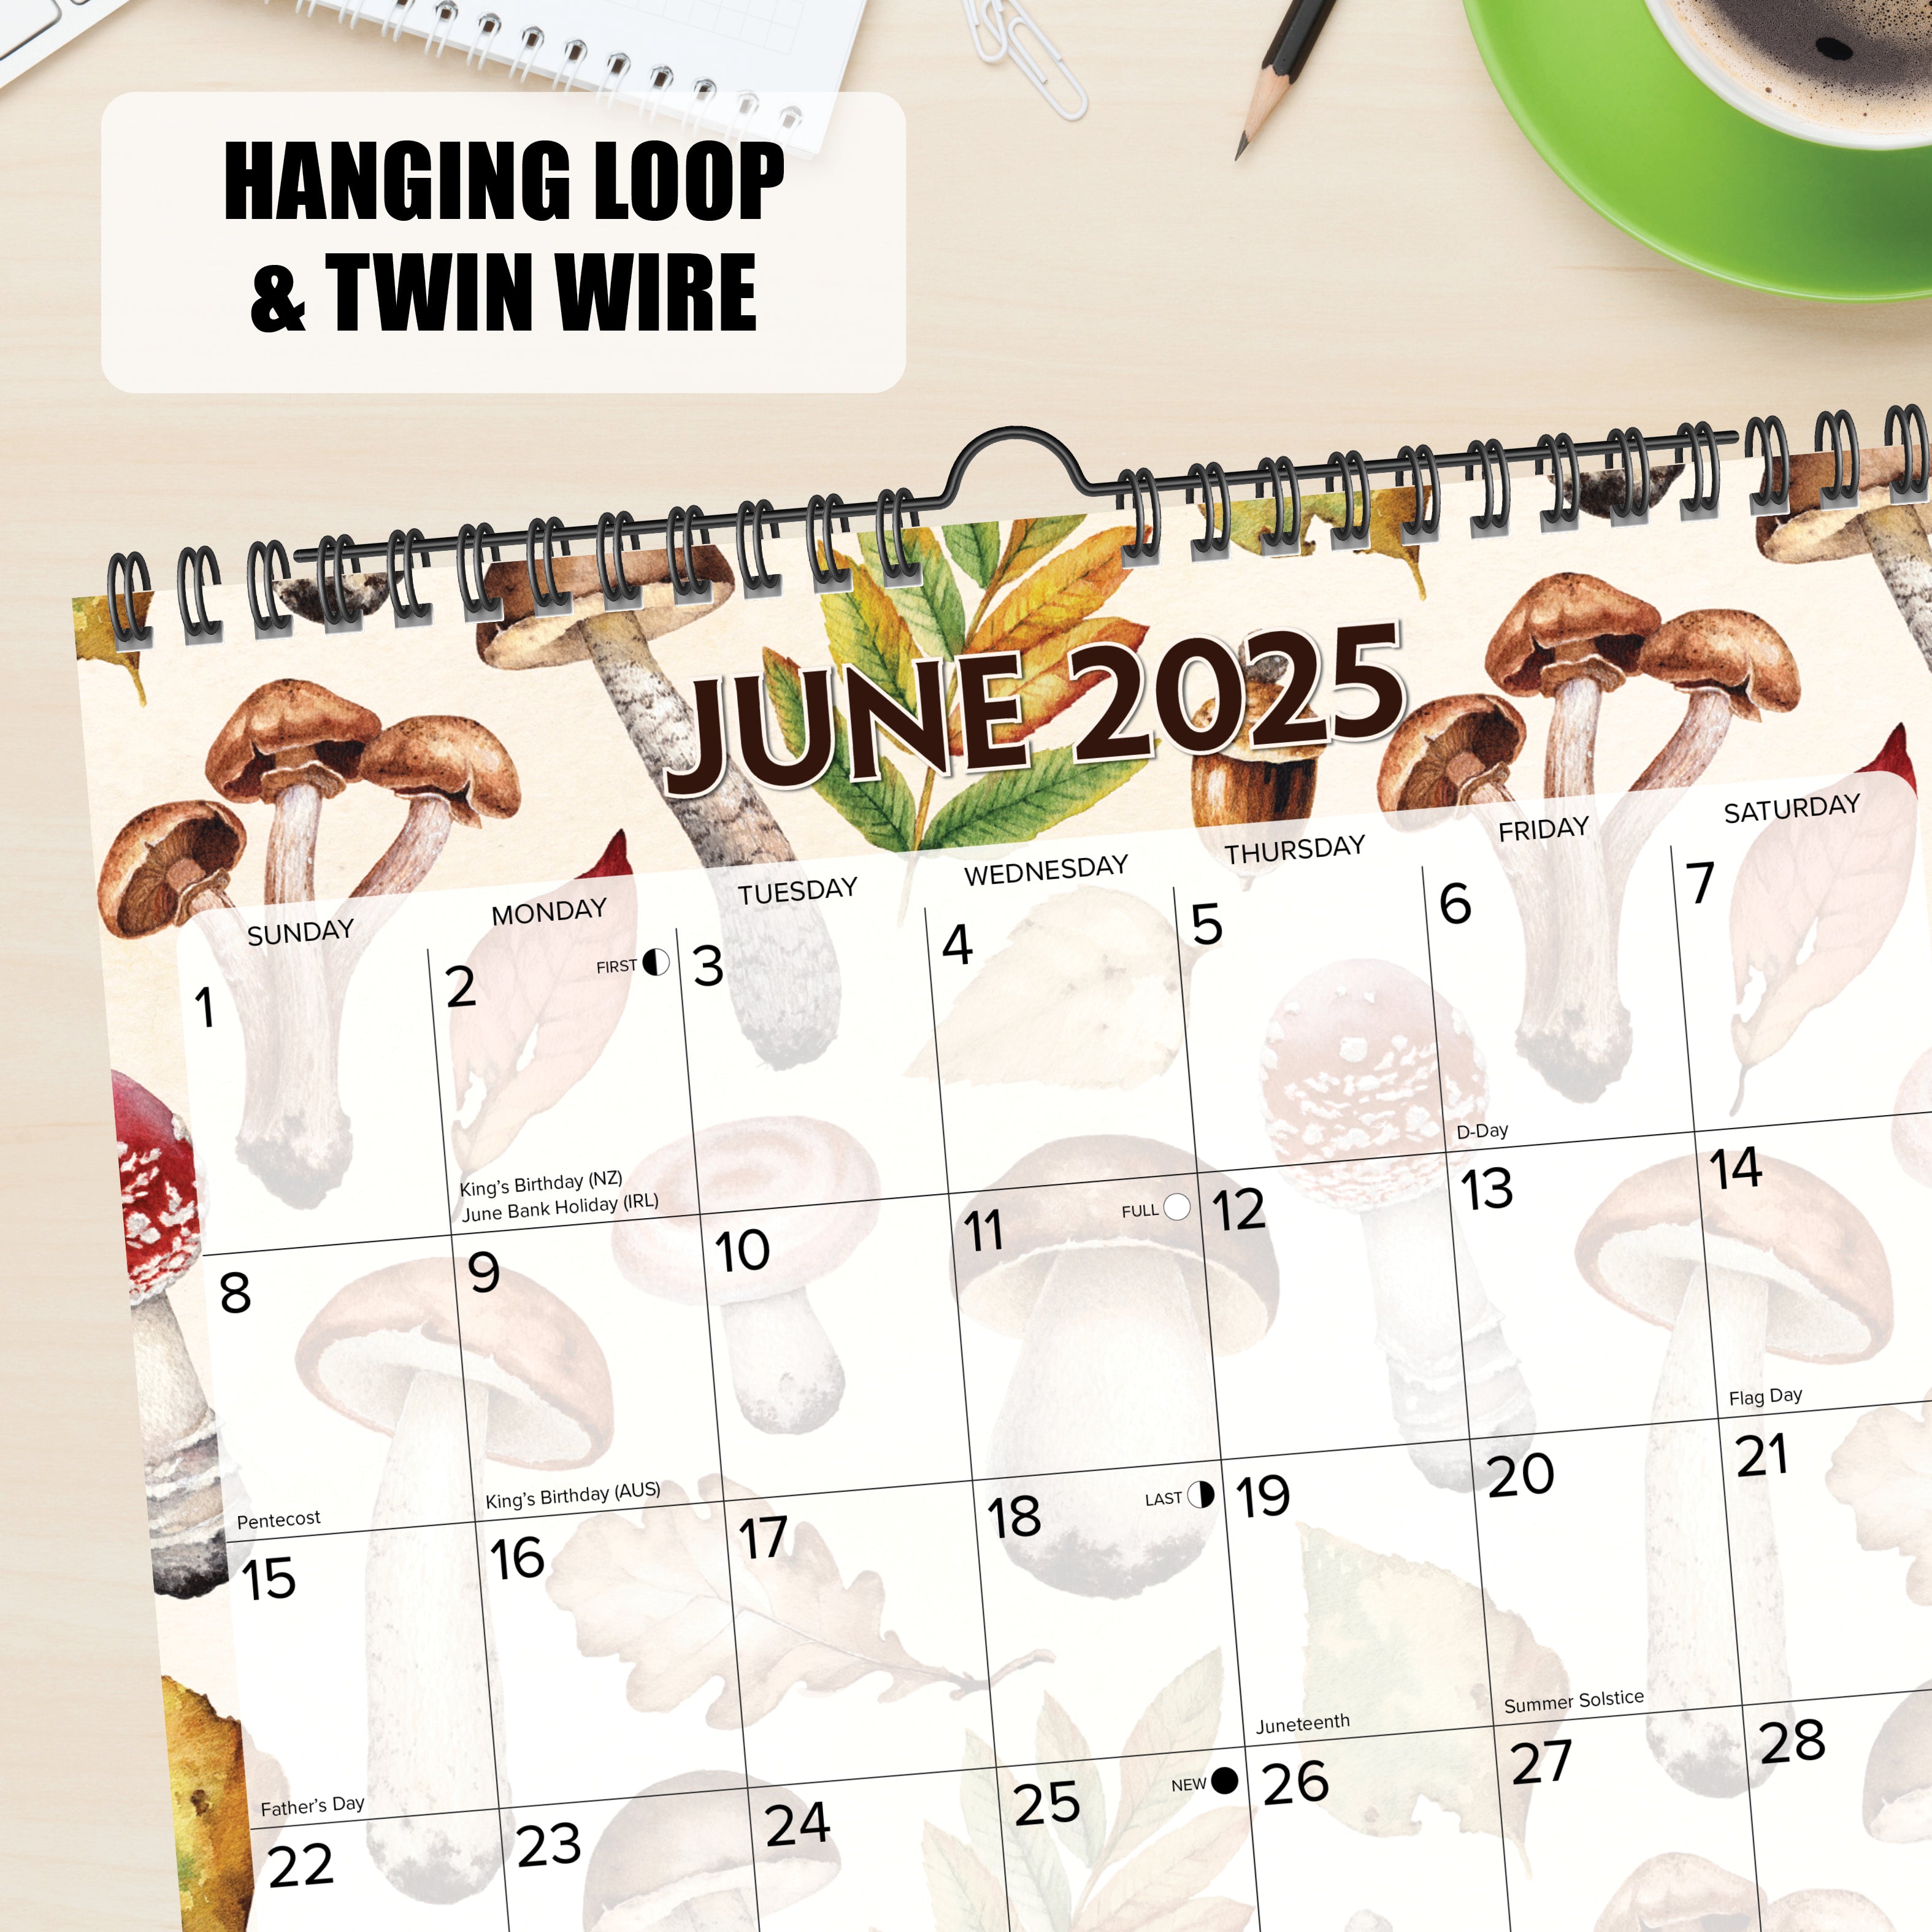 July 2024 - June 2025 Mushrooms - Square Wall Academic Calendar